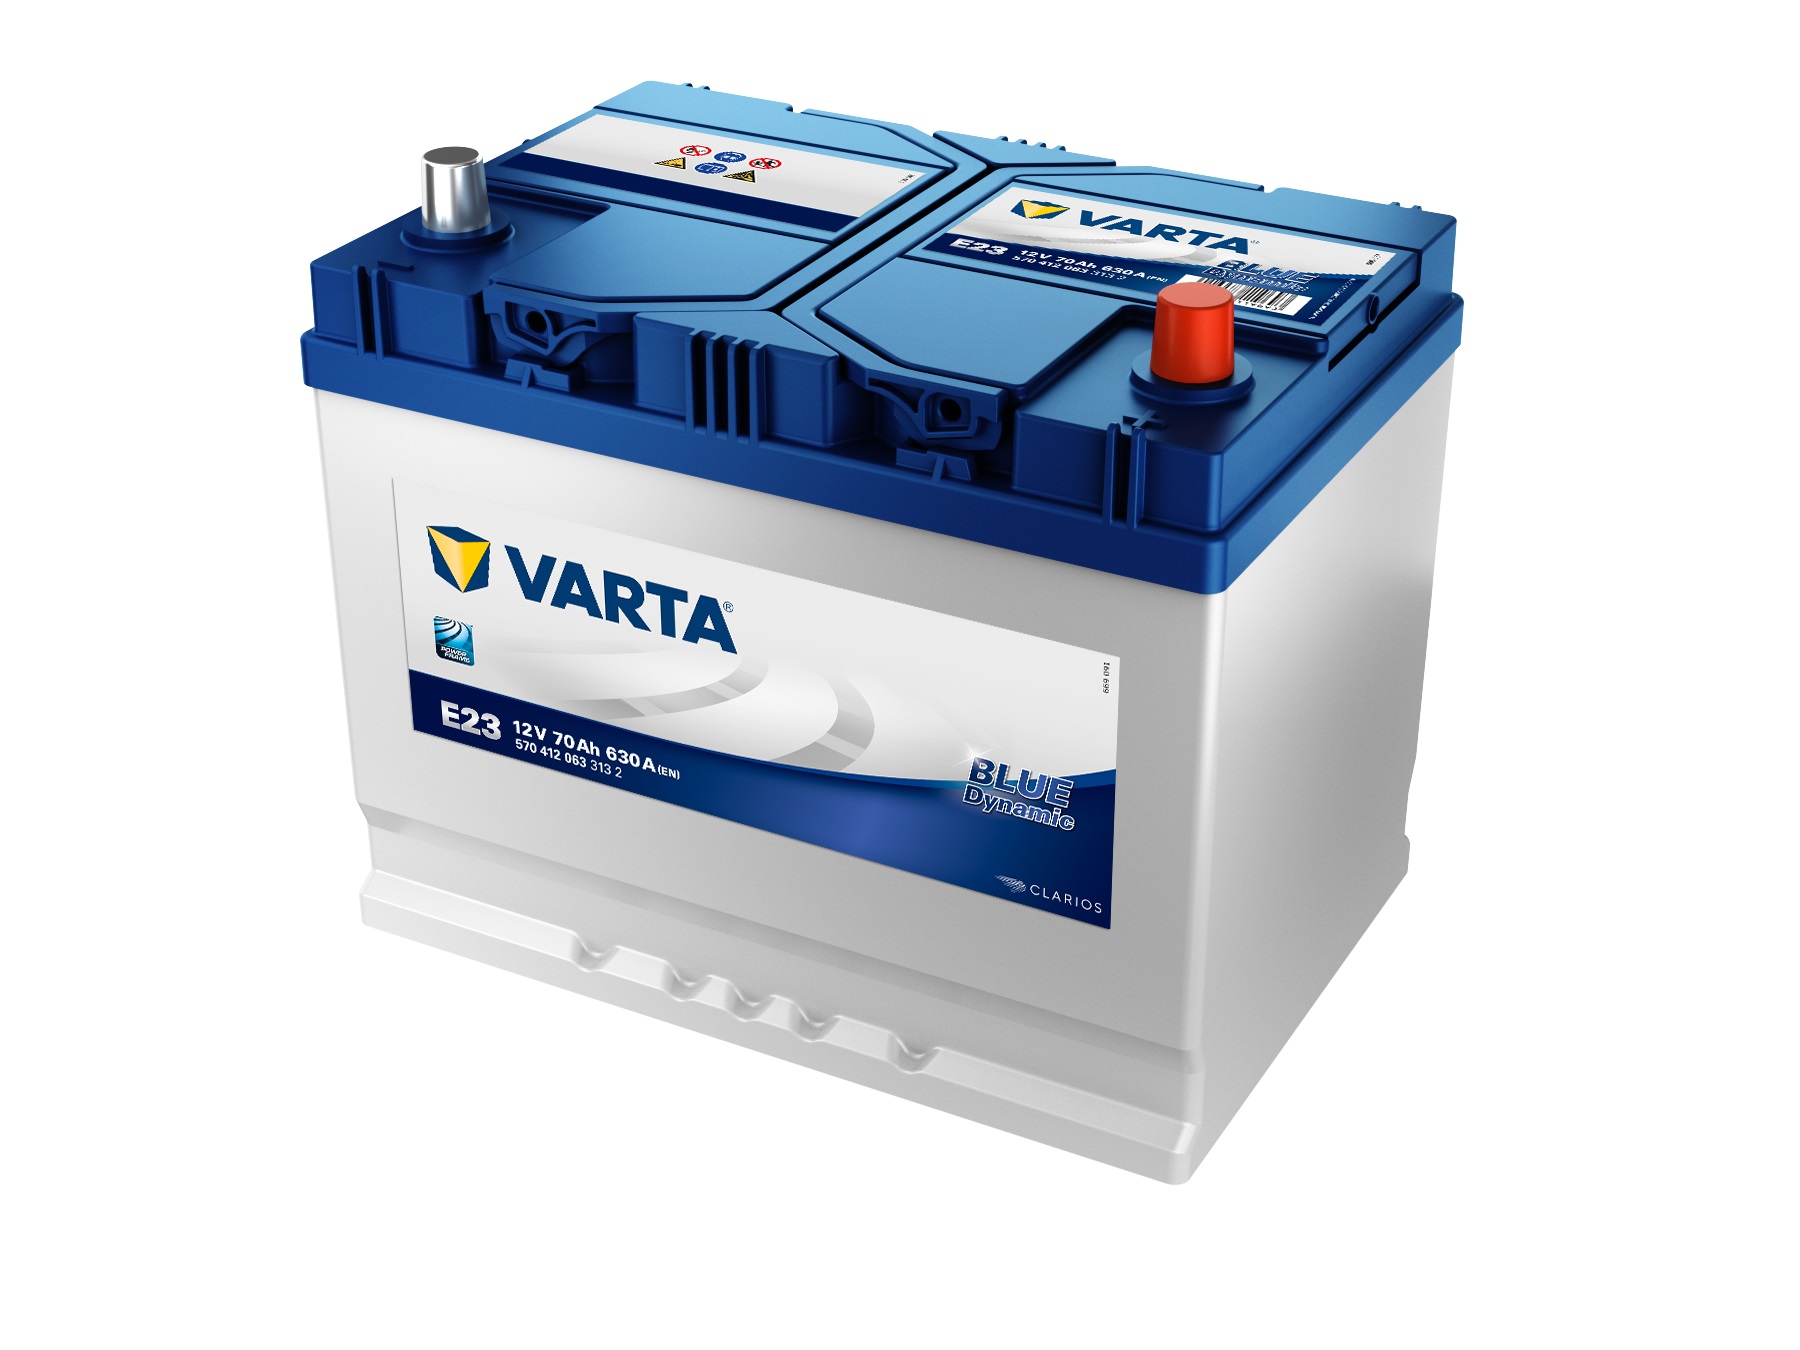 VARTA Blue Dynamic Autobatterie, E23, 5704120633, 70 Ah, 630 A von Varta